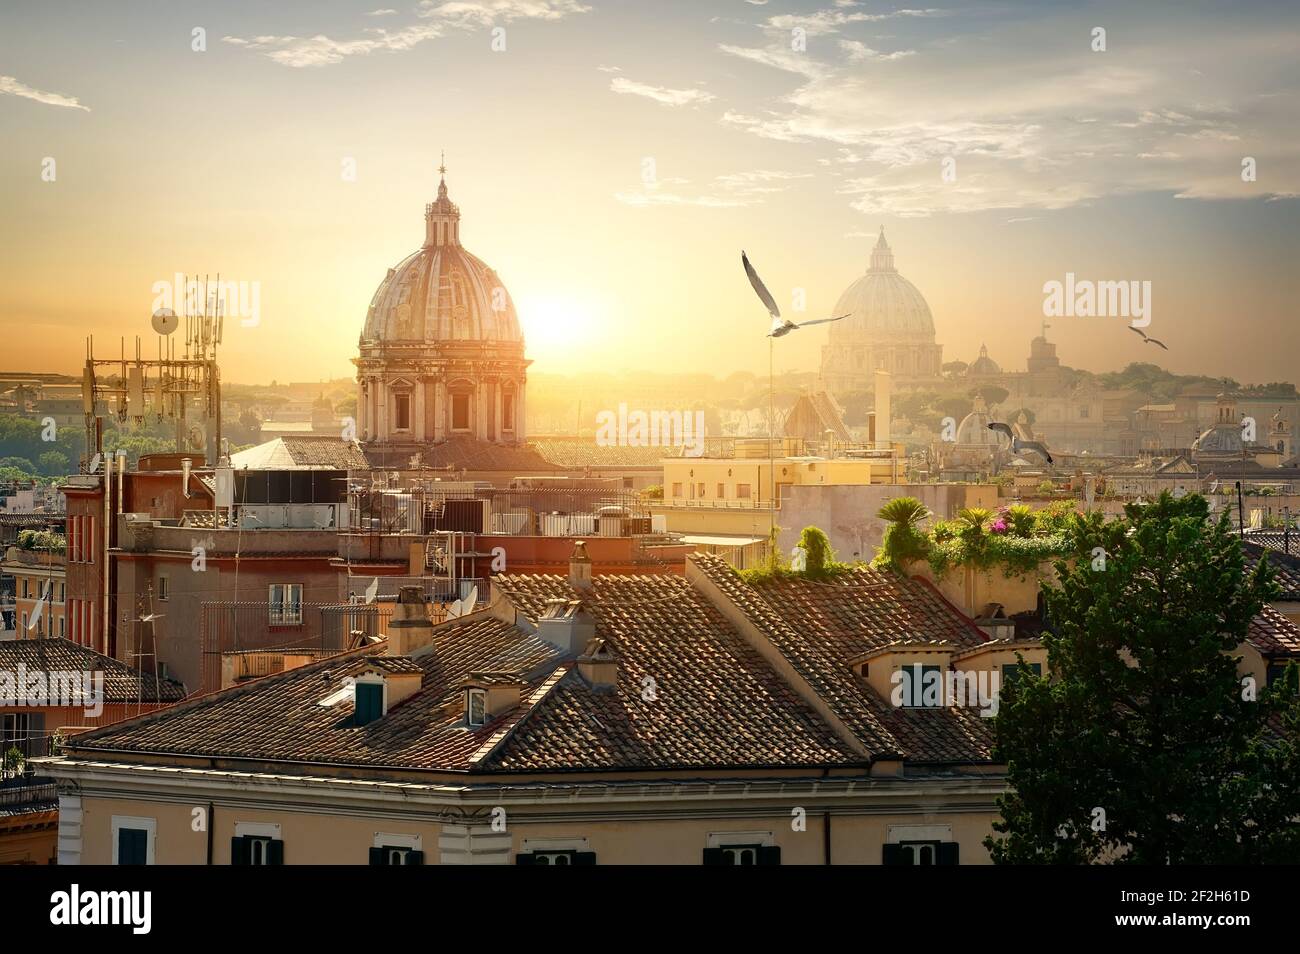 Dome of Rome historic architecture closeup, Italy Stock Photo